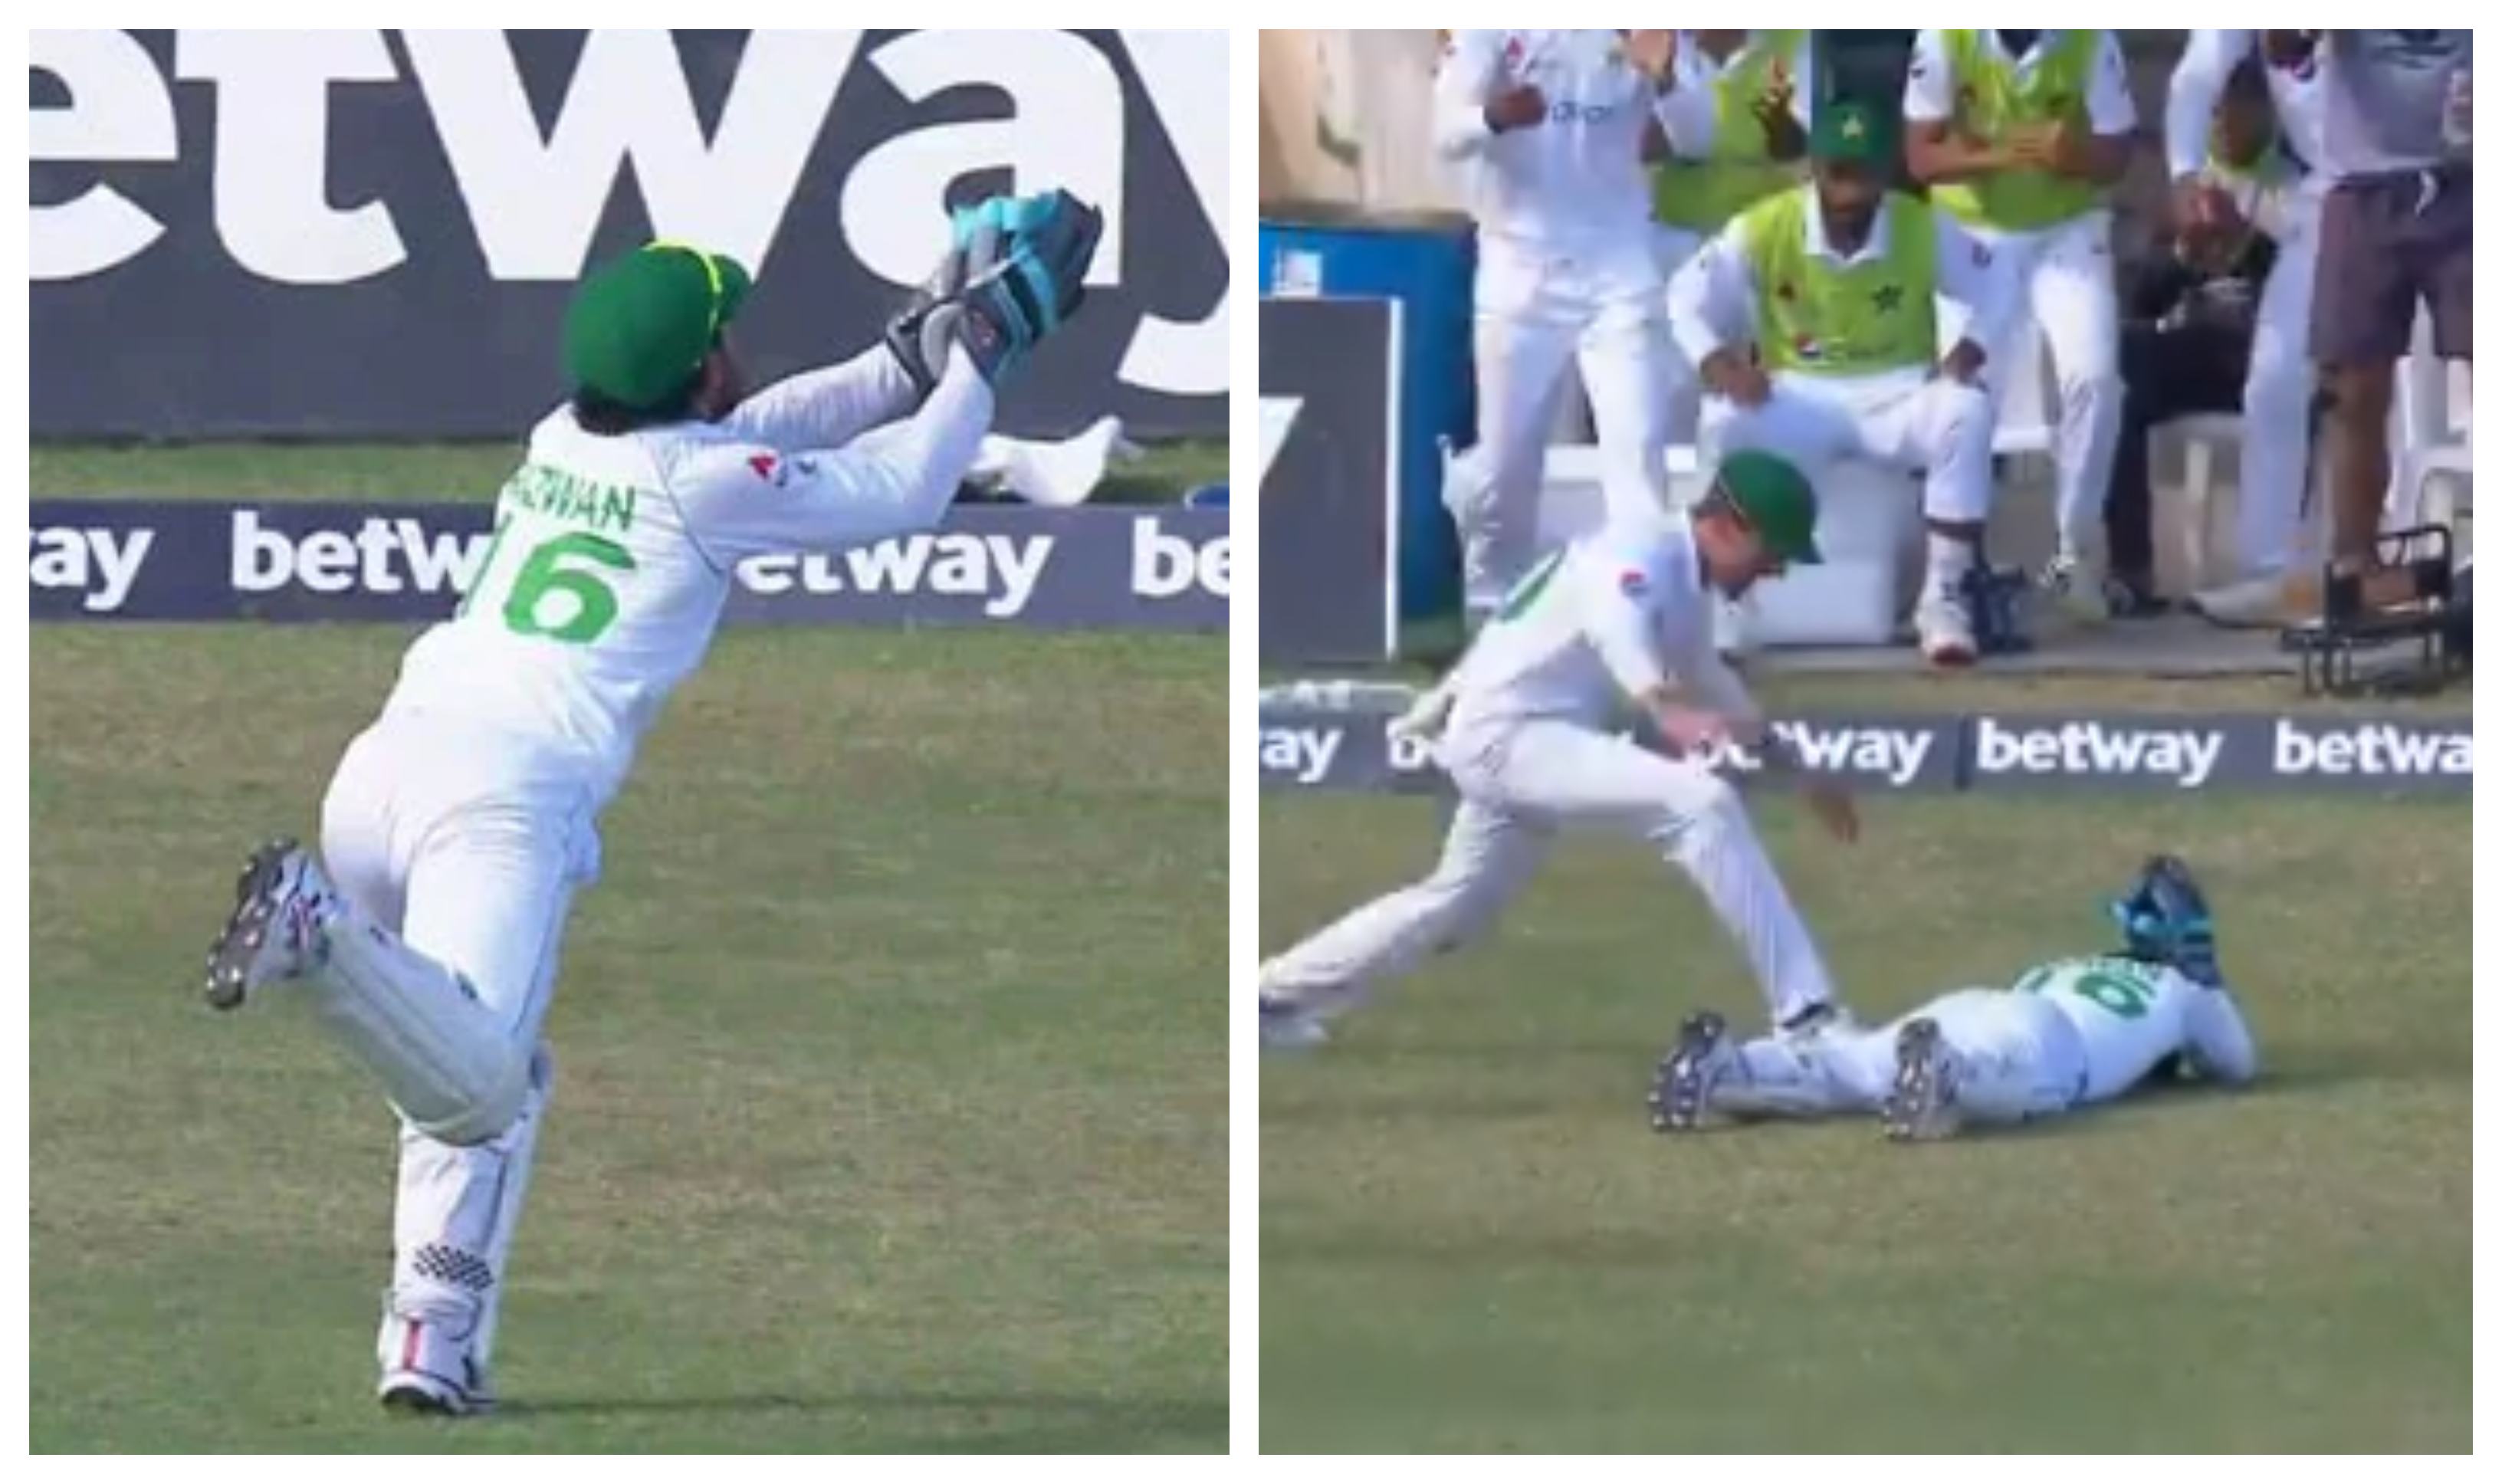 Mohammad Rizwan's incredible catch | Screengrab